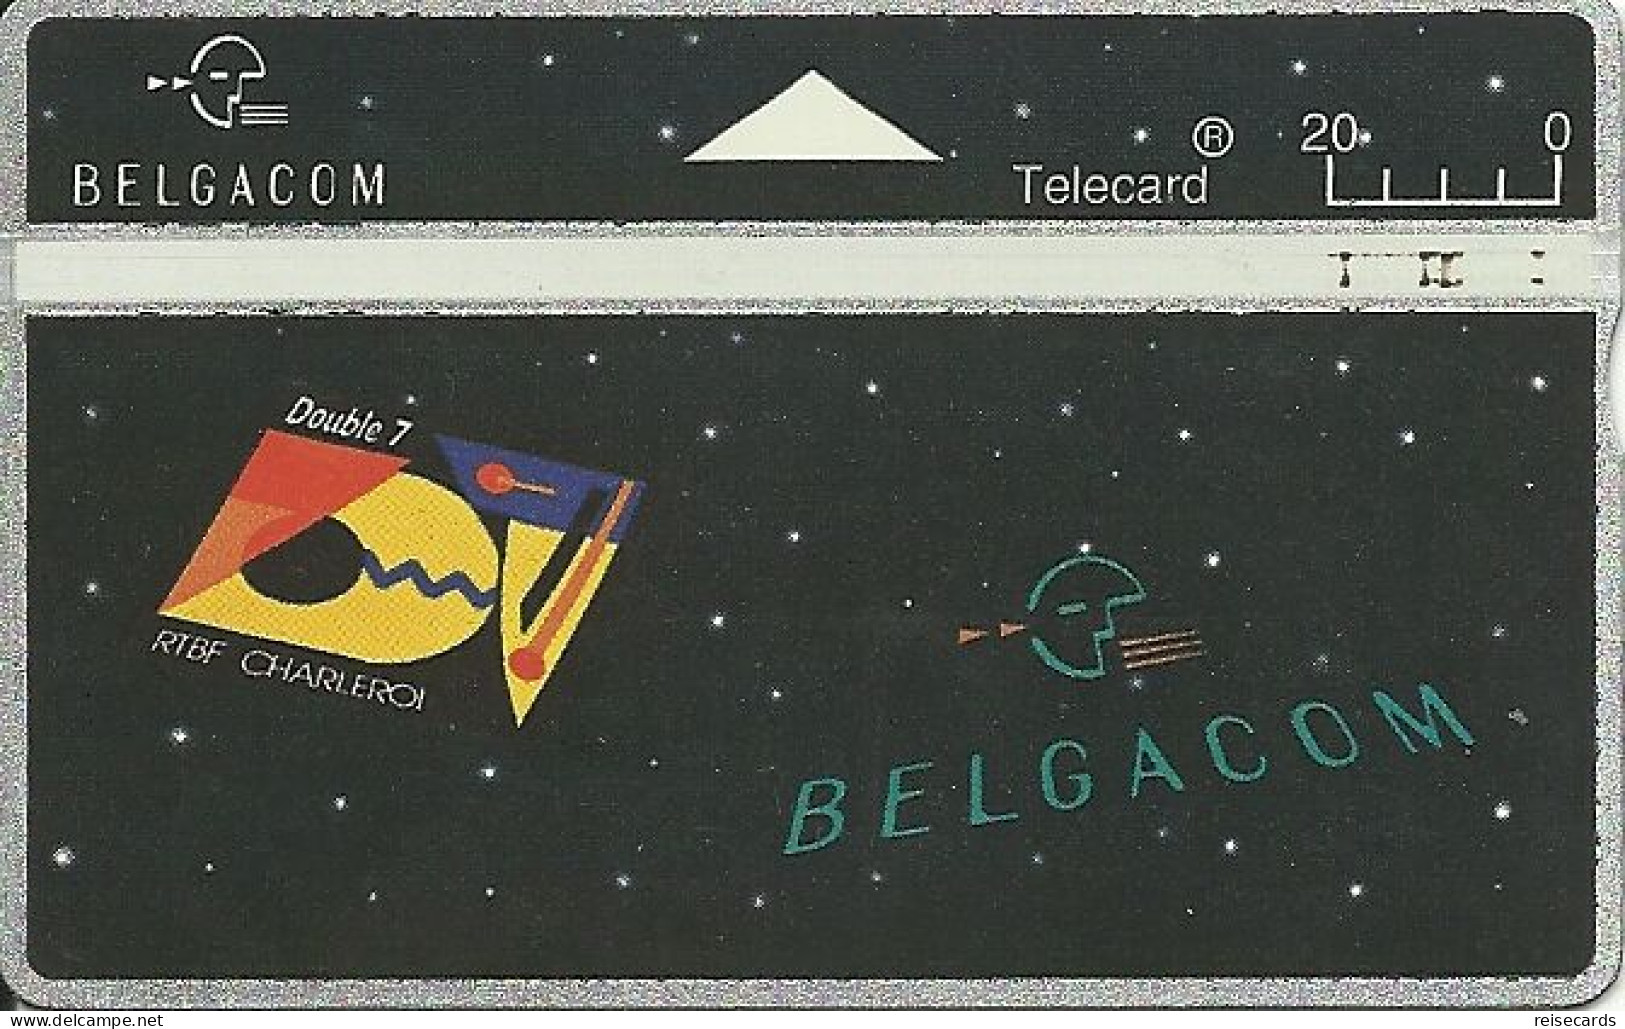 Belgium: Belgacom: 312A Double 7, RTBF Charleroi - Without Chip